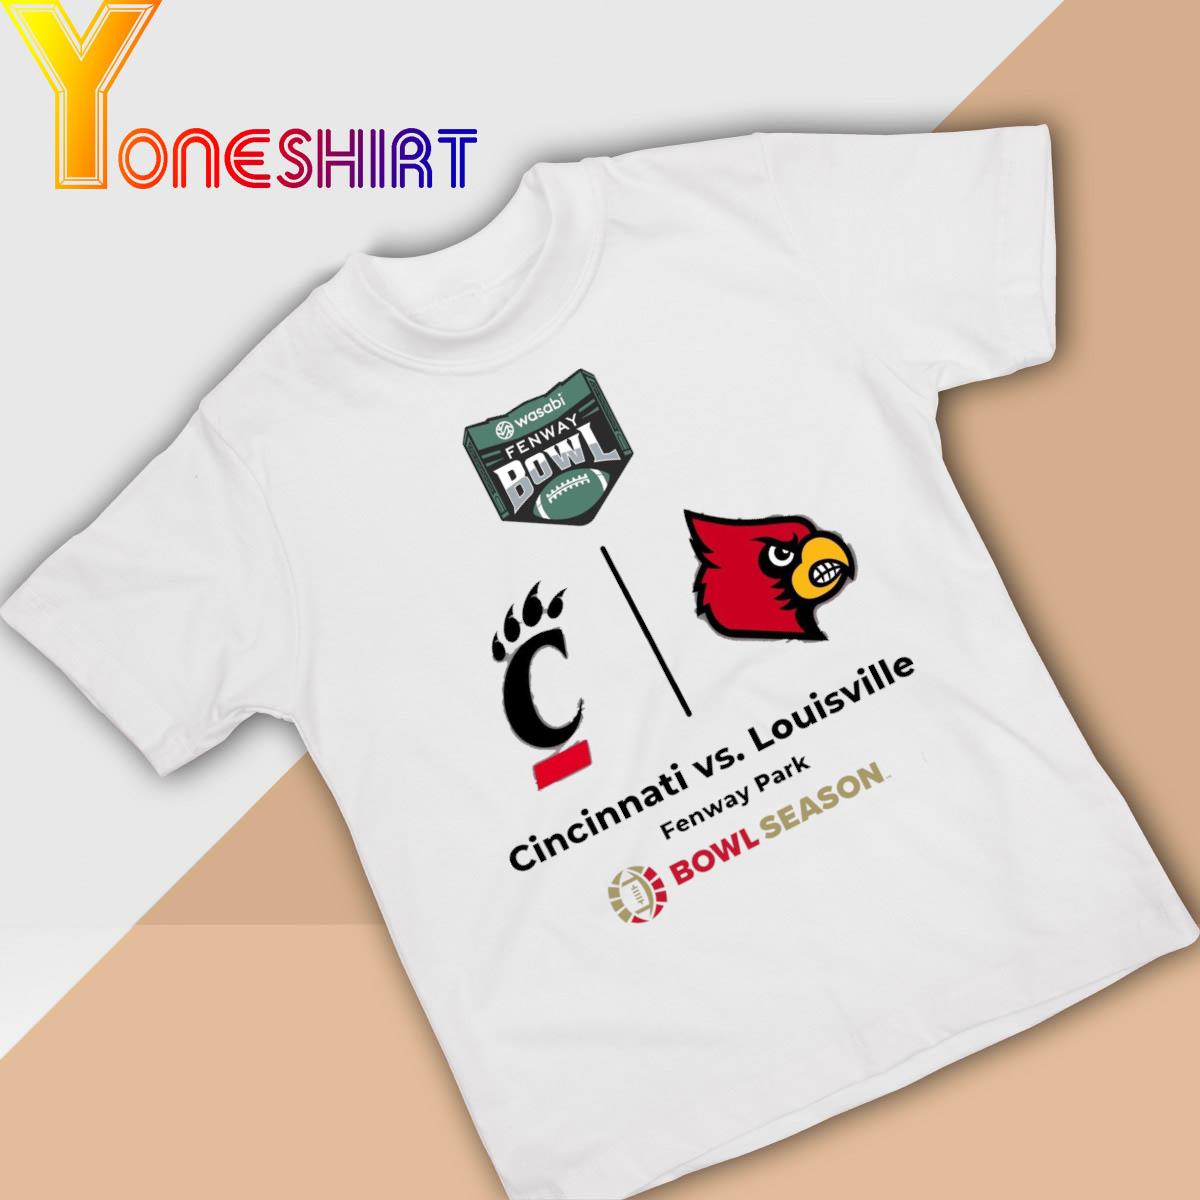 Wasabi Fenway Bowl Cincinnati vs Louisville Fenway Park Bowl Season shirt